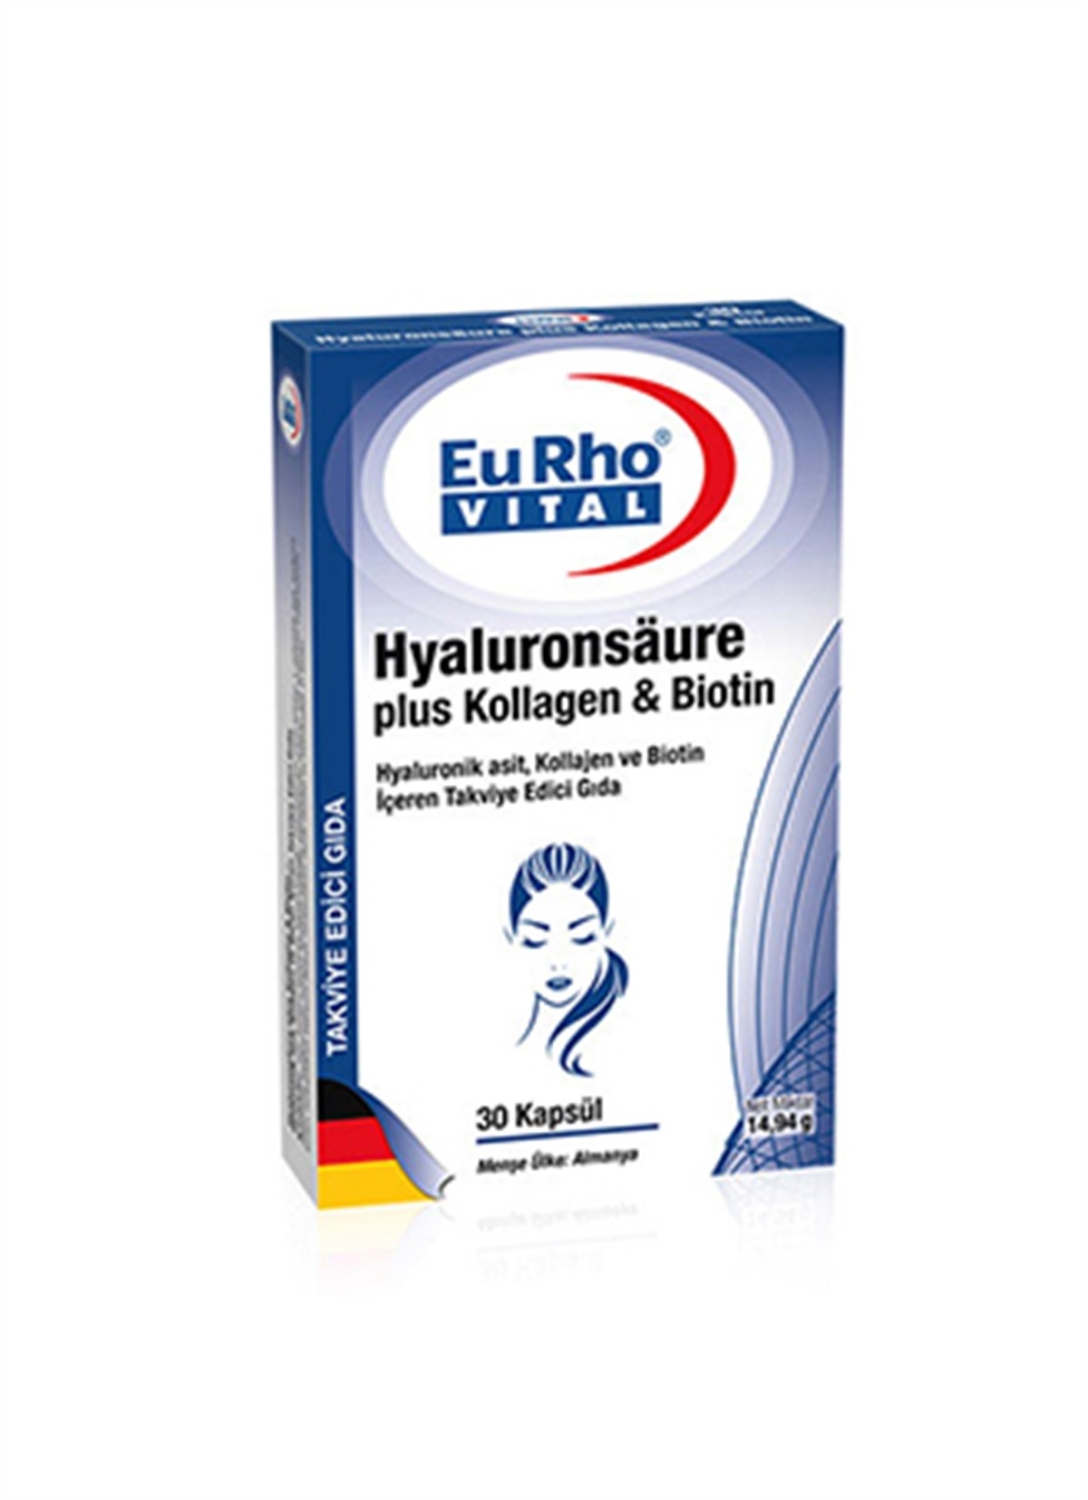 EuRho Vital Hyaluronsaure plus Kollagen & Biotin 30 Kapsül - 1